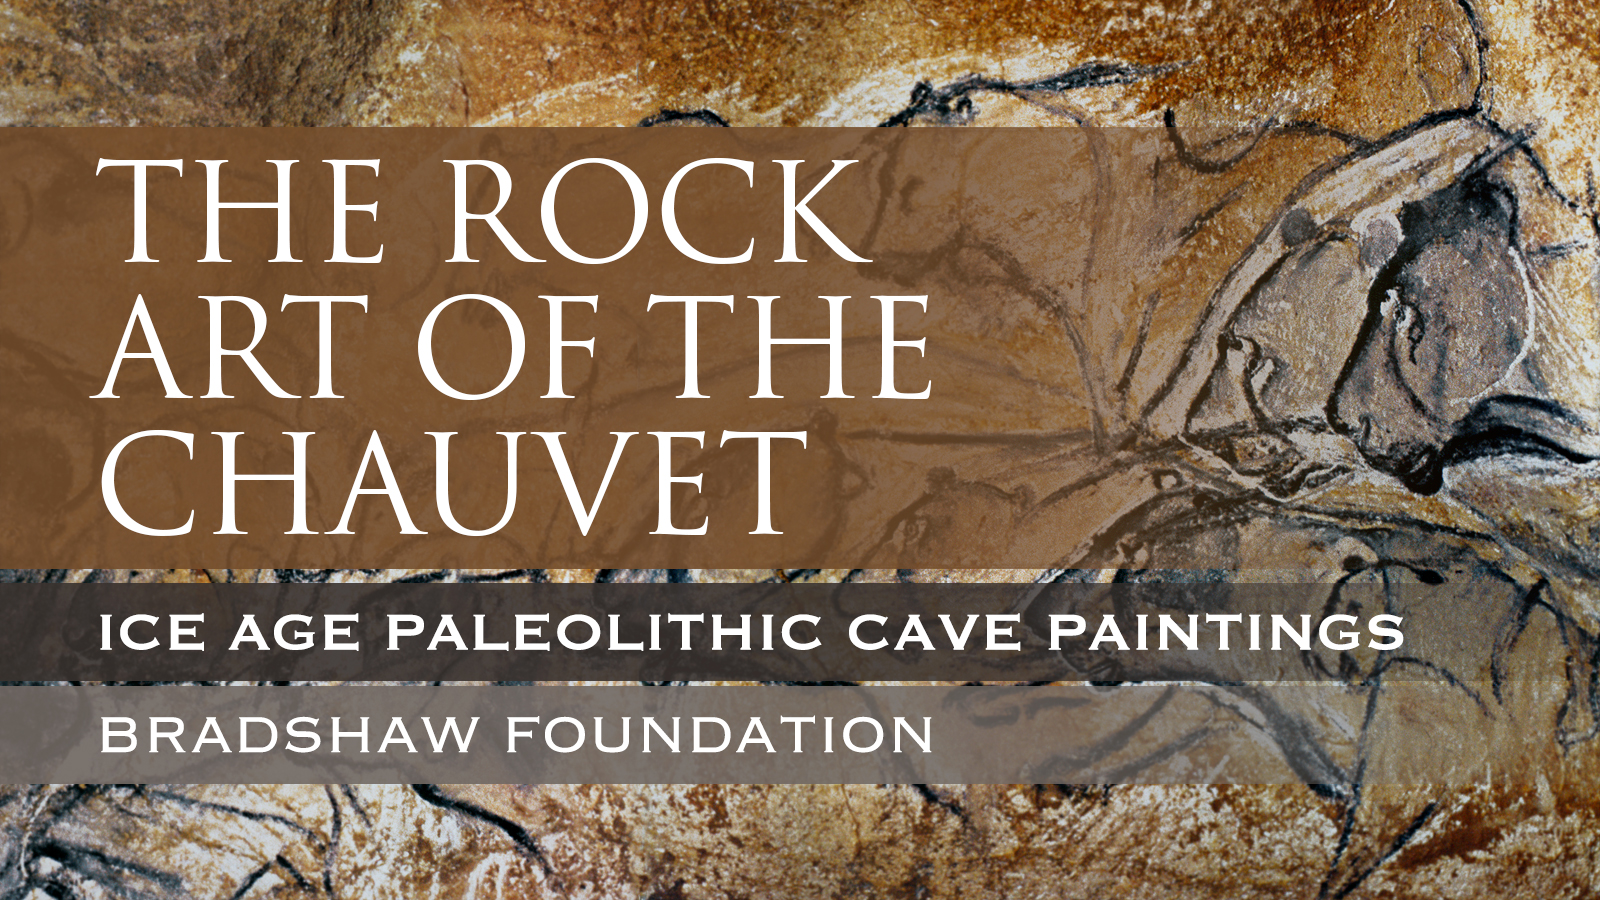 Chauvet Cave granted World Heritage Status